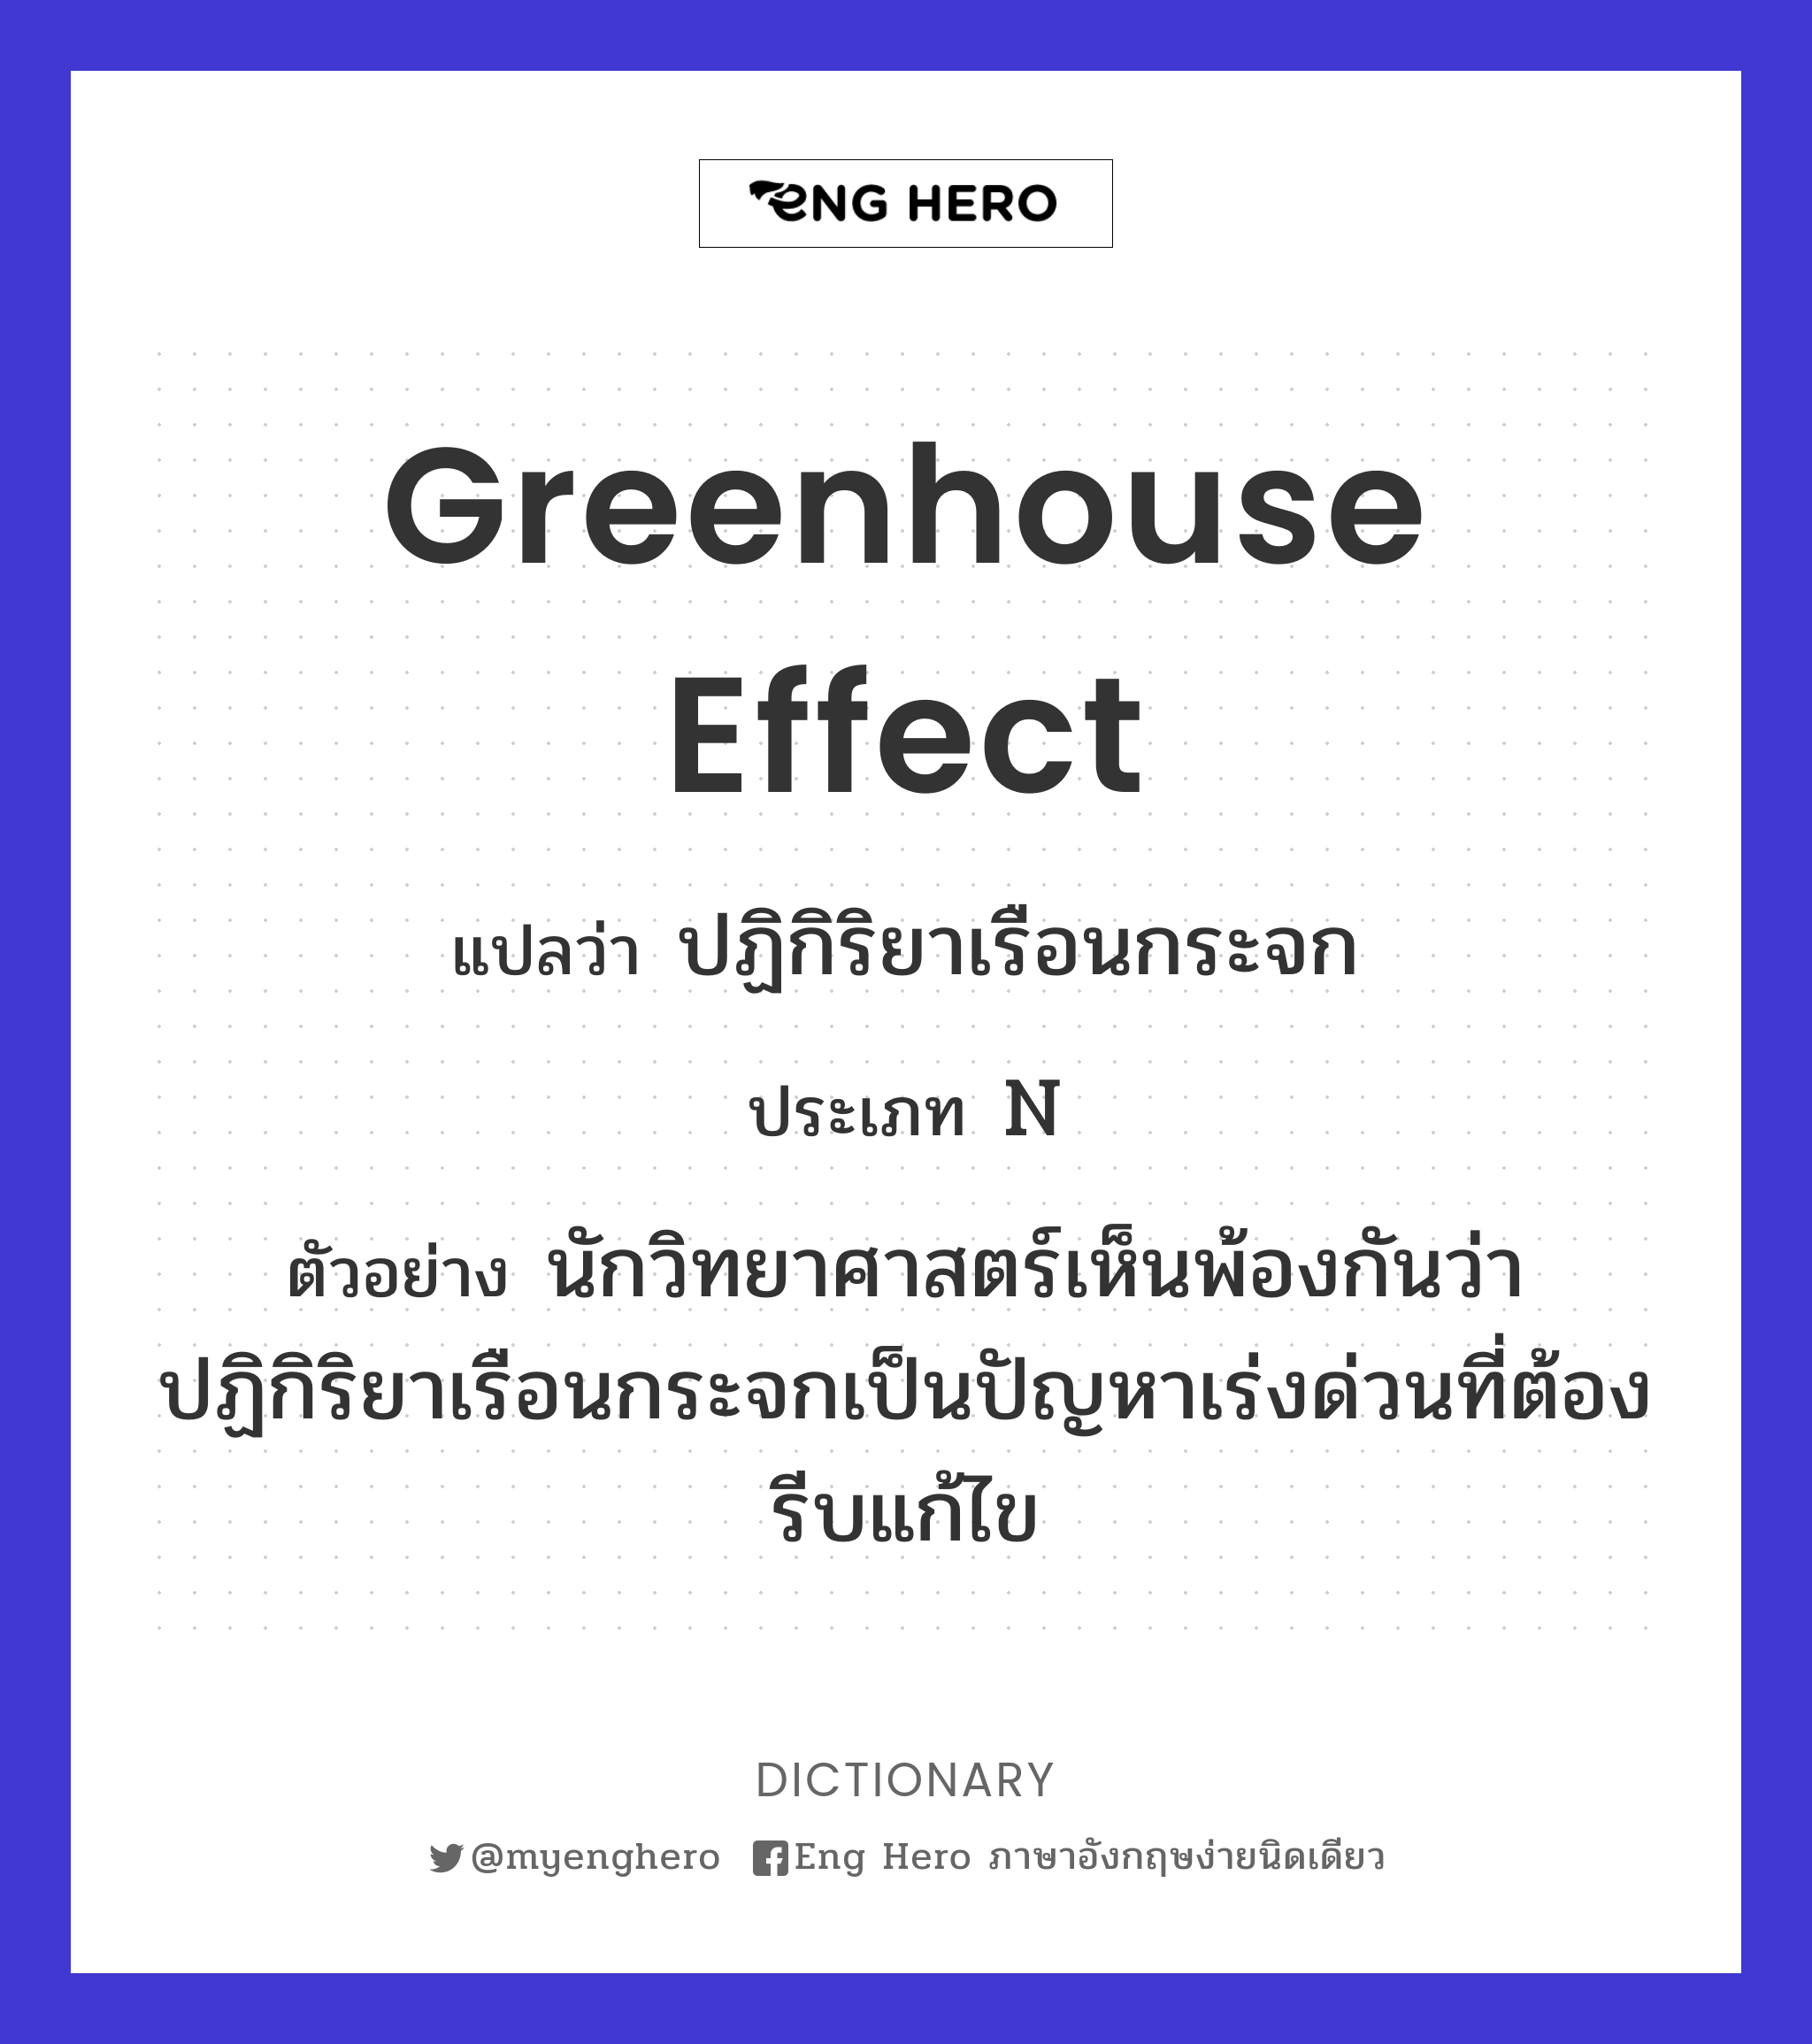 greenhouse effect